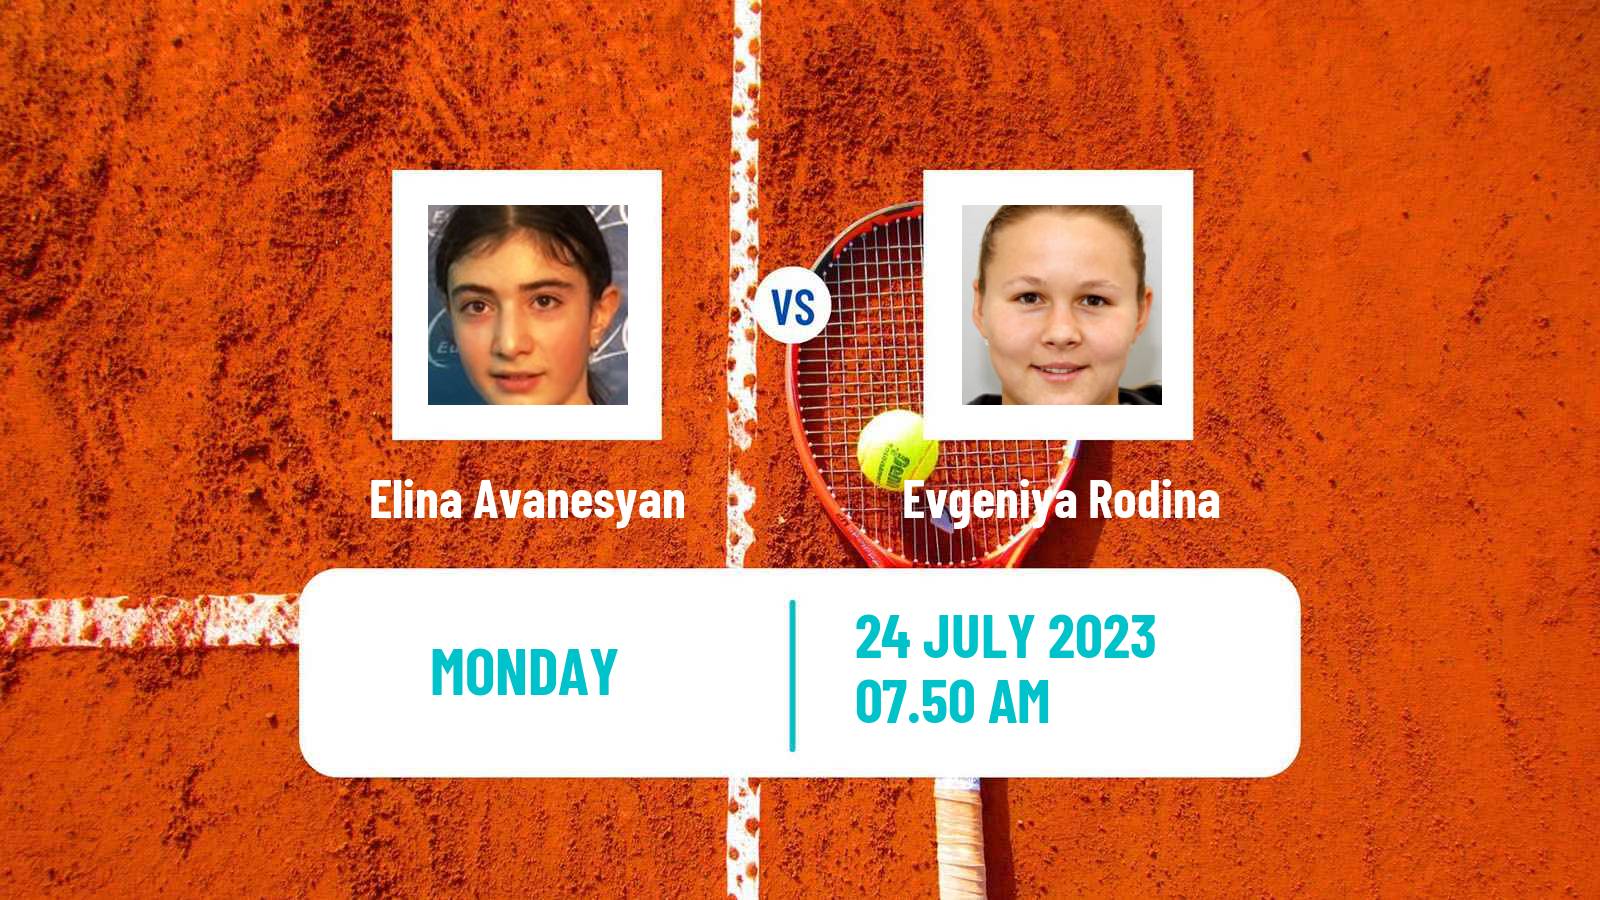 Tennis WTA Lausanne Elina Avanesyan - Evgeniya Rodina